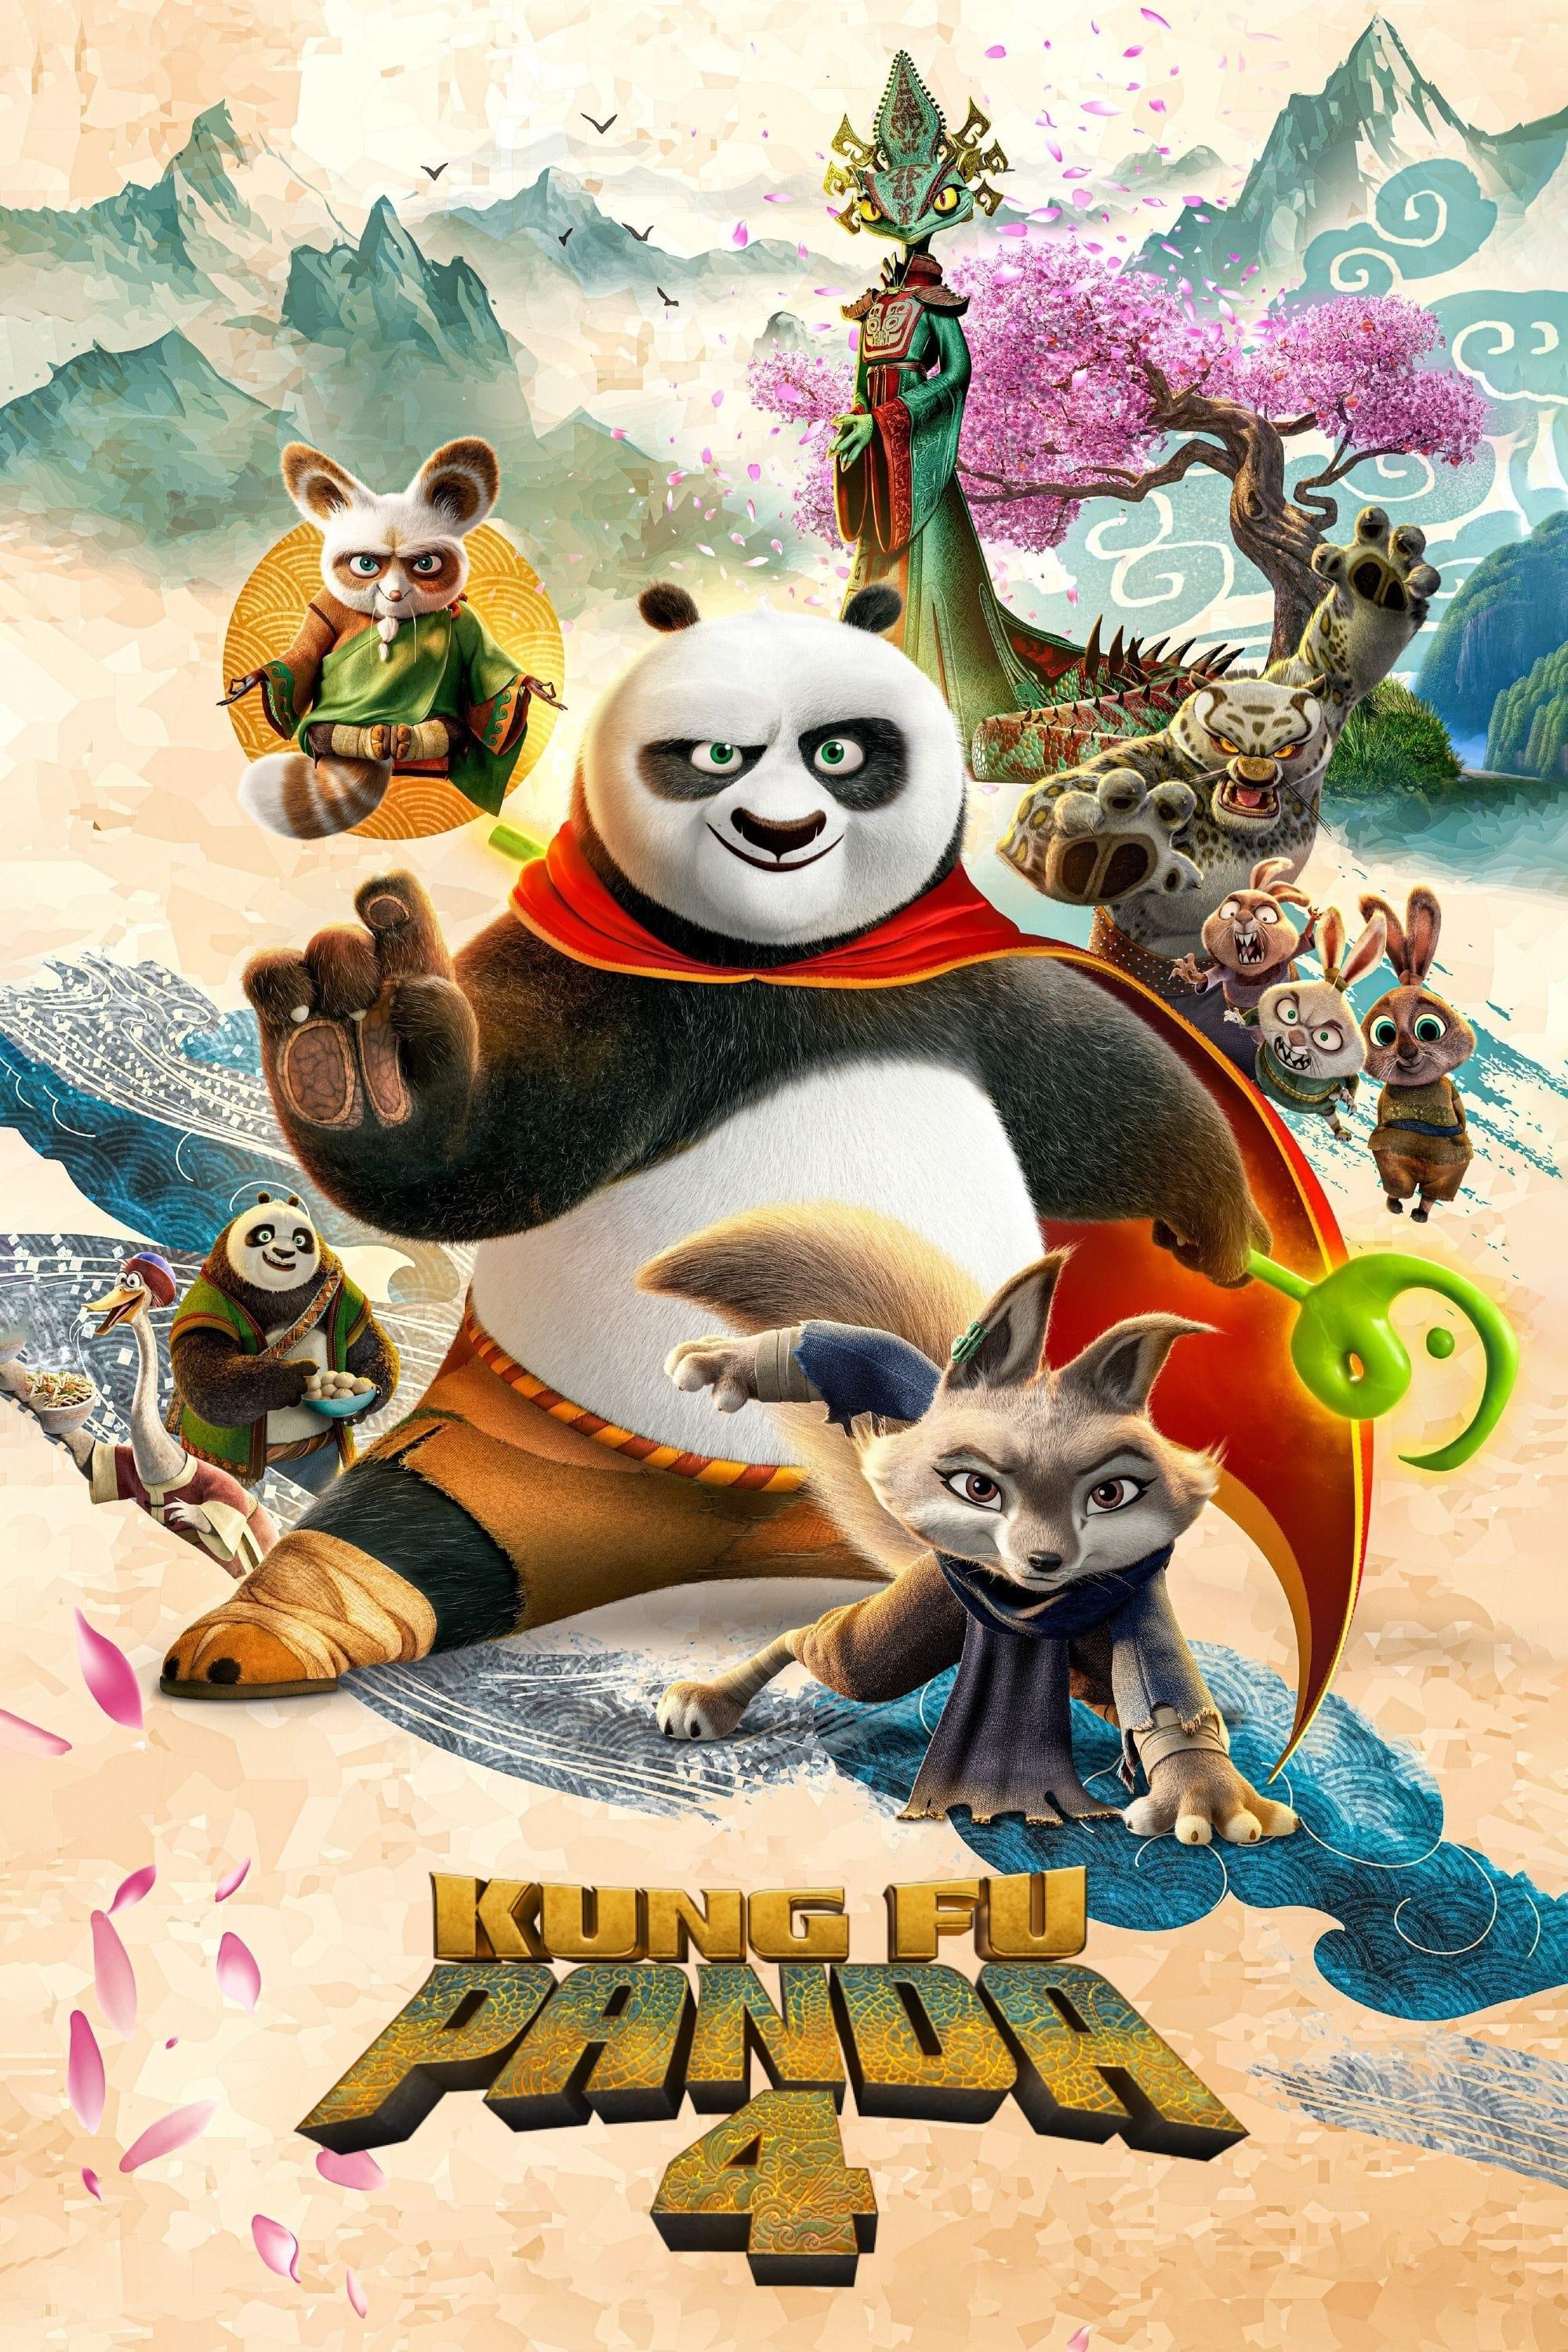 Movie poster of "Kung Fu Panda 4"